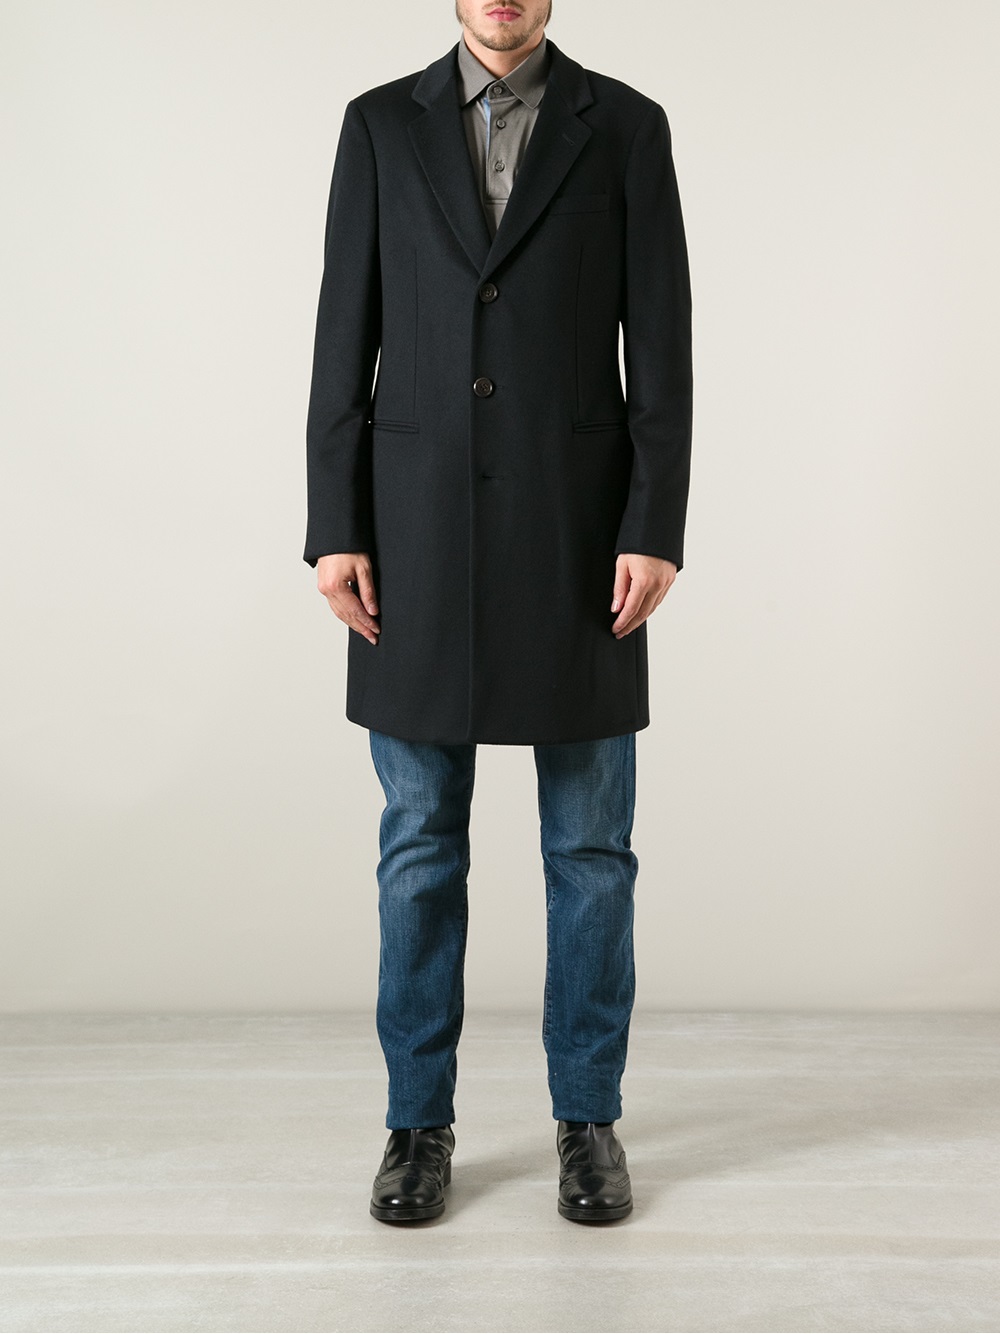 Lyst - Giorgio Armani Dress Coat in Black for Men